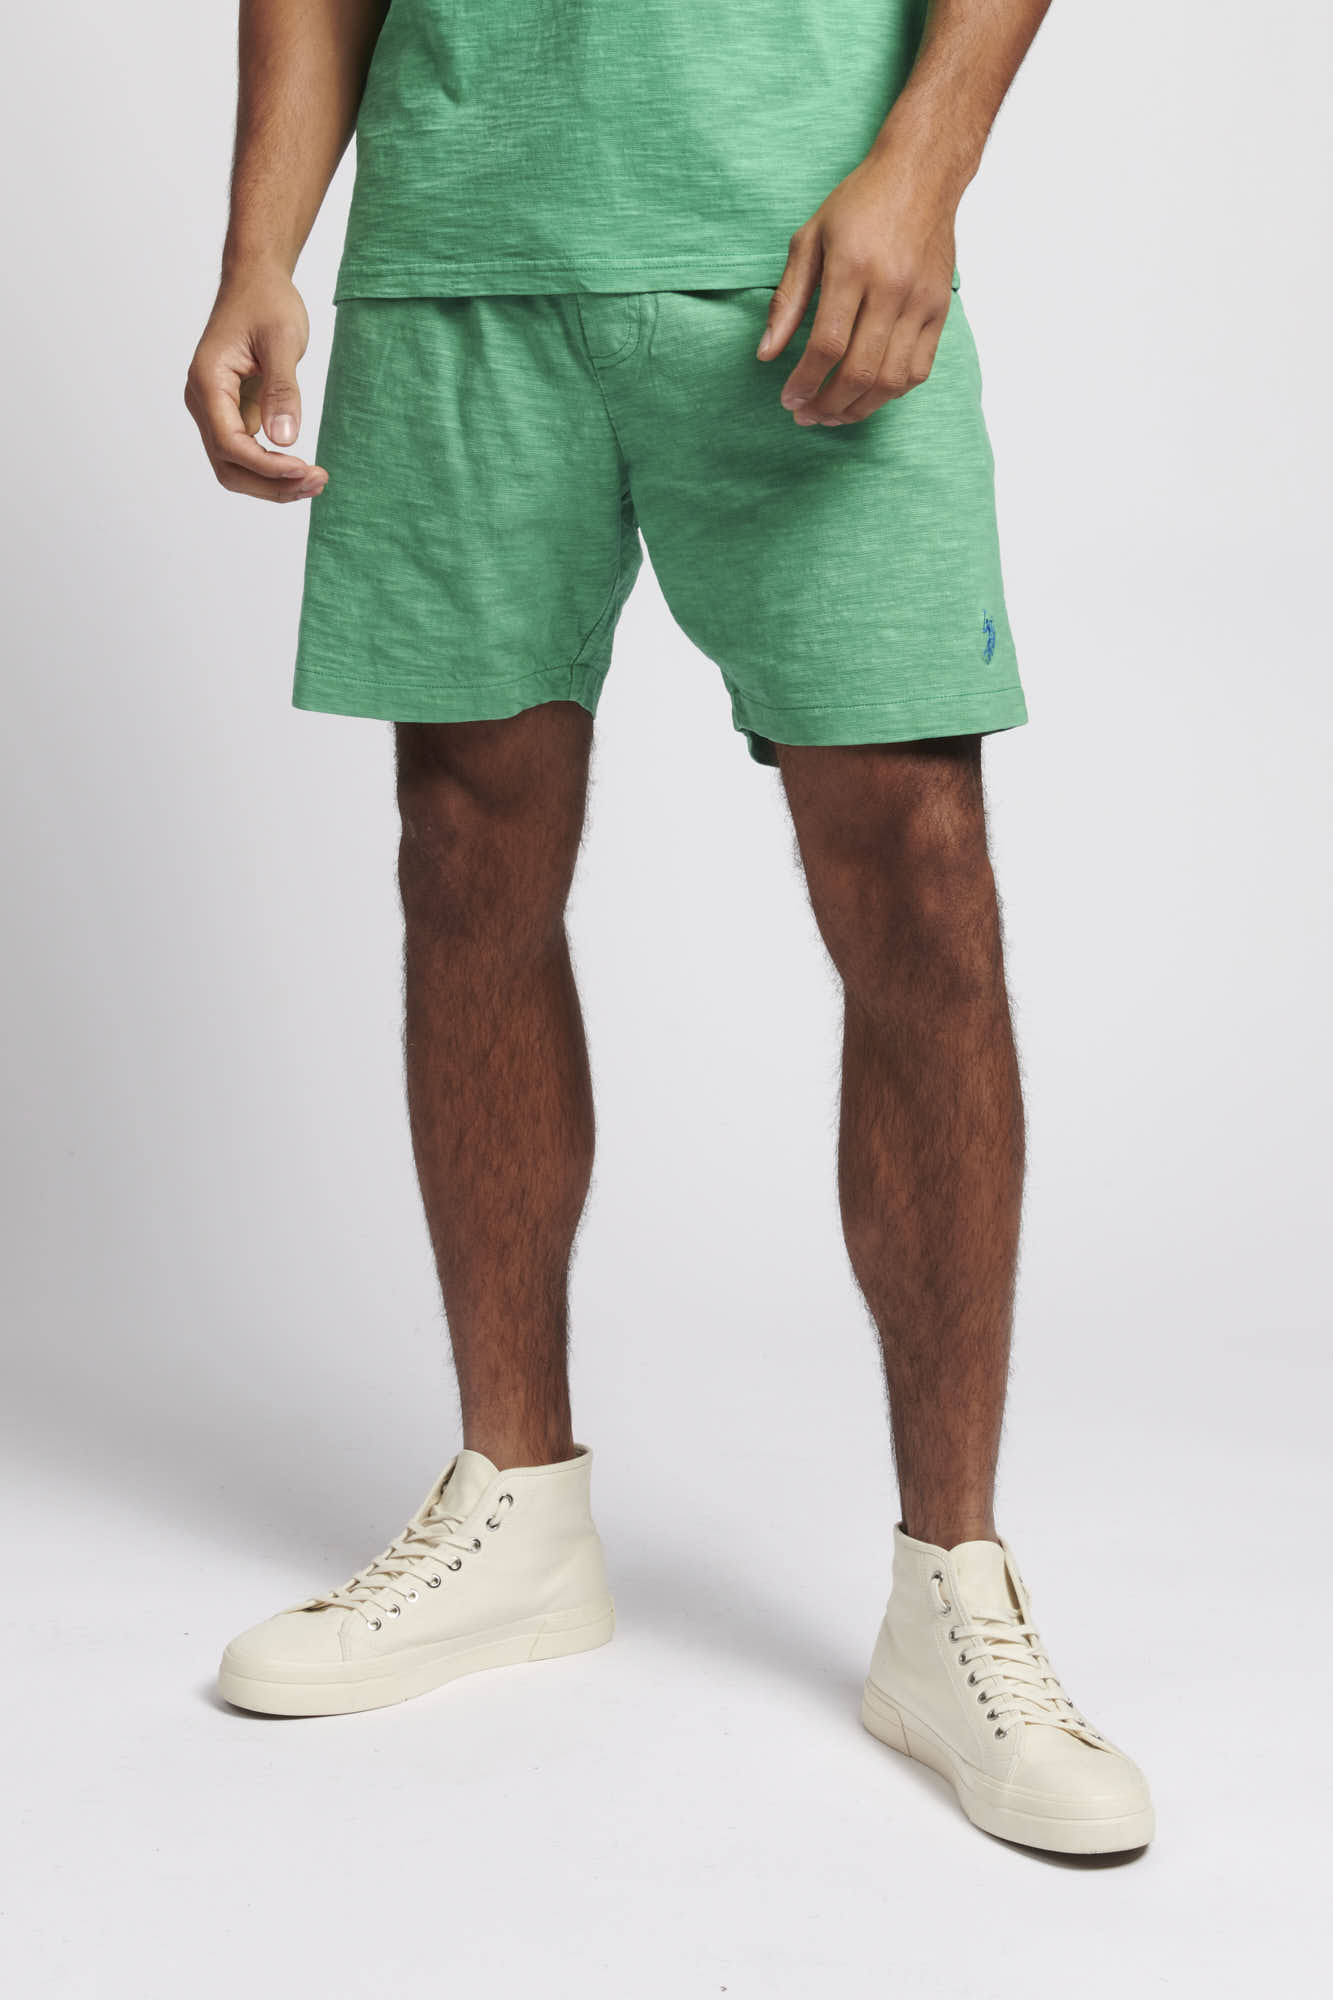 Mens Garment Dye Sweat Shorts in Golf Green